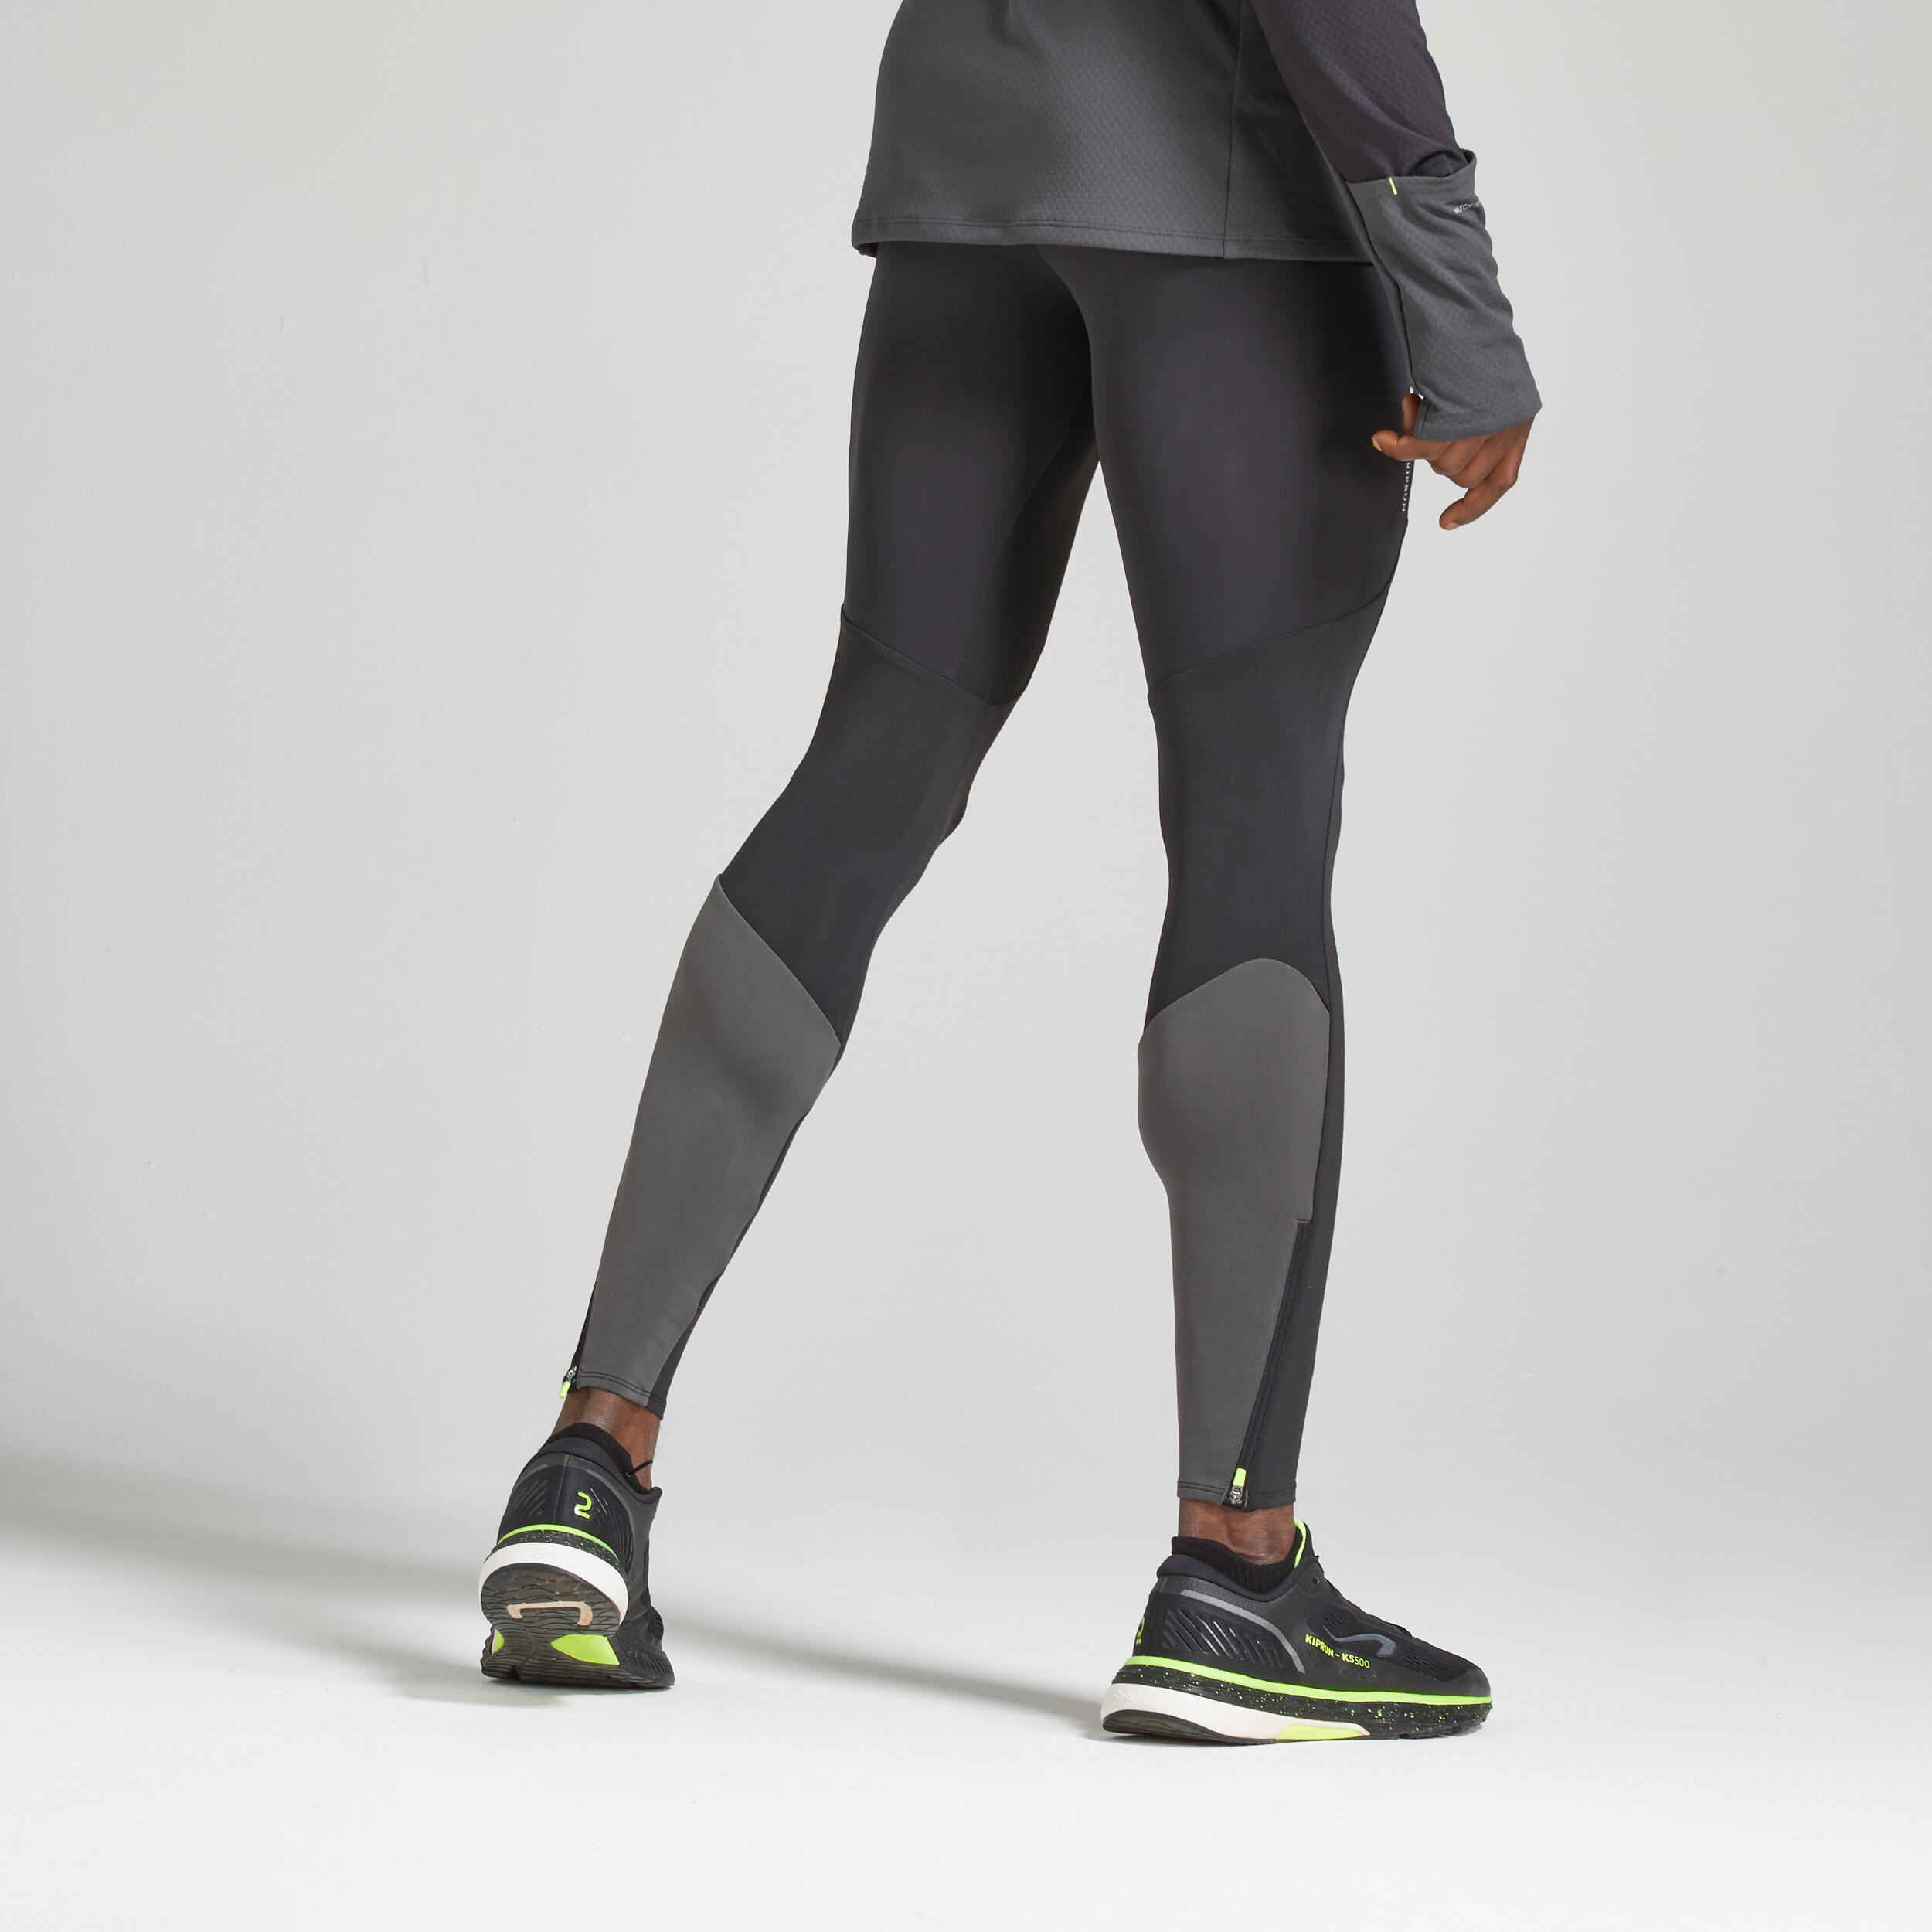 Men's Running Leggings - Warm Black/Grey - Black, Carbon grey, Fluo lime  yellow - Kiprun - Decathlon